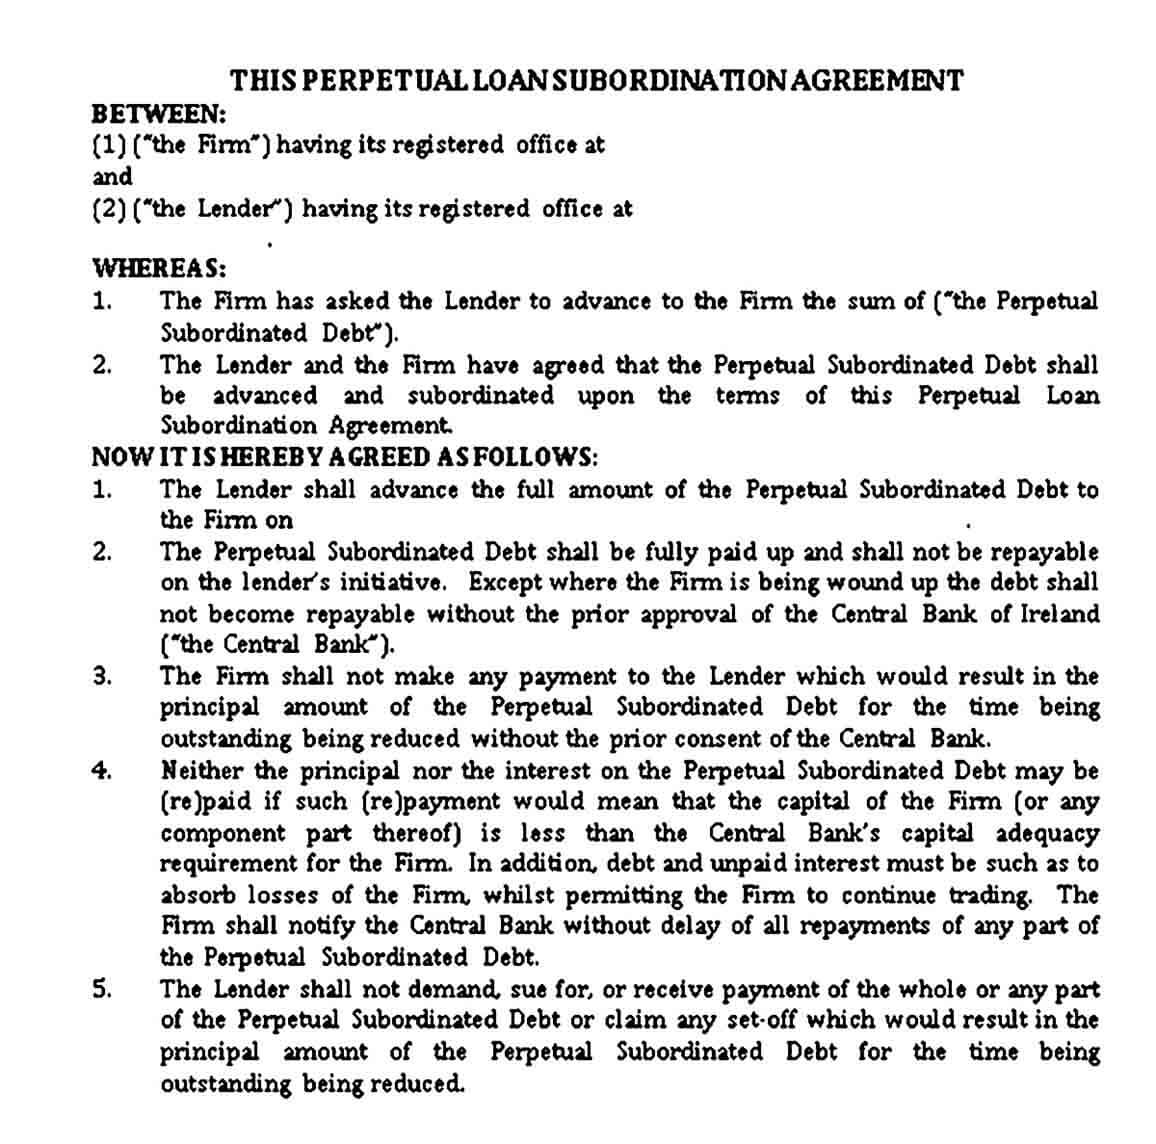 Perpetual Loan Subordination Agreement